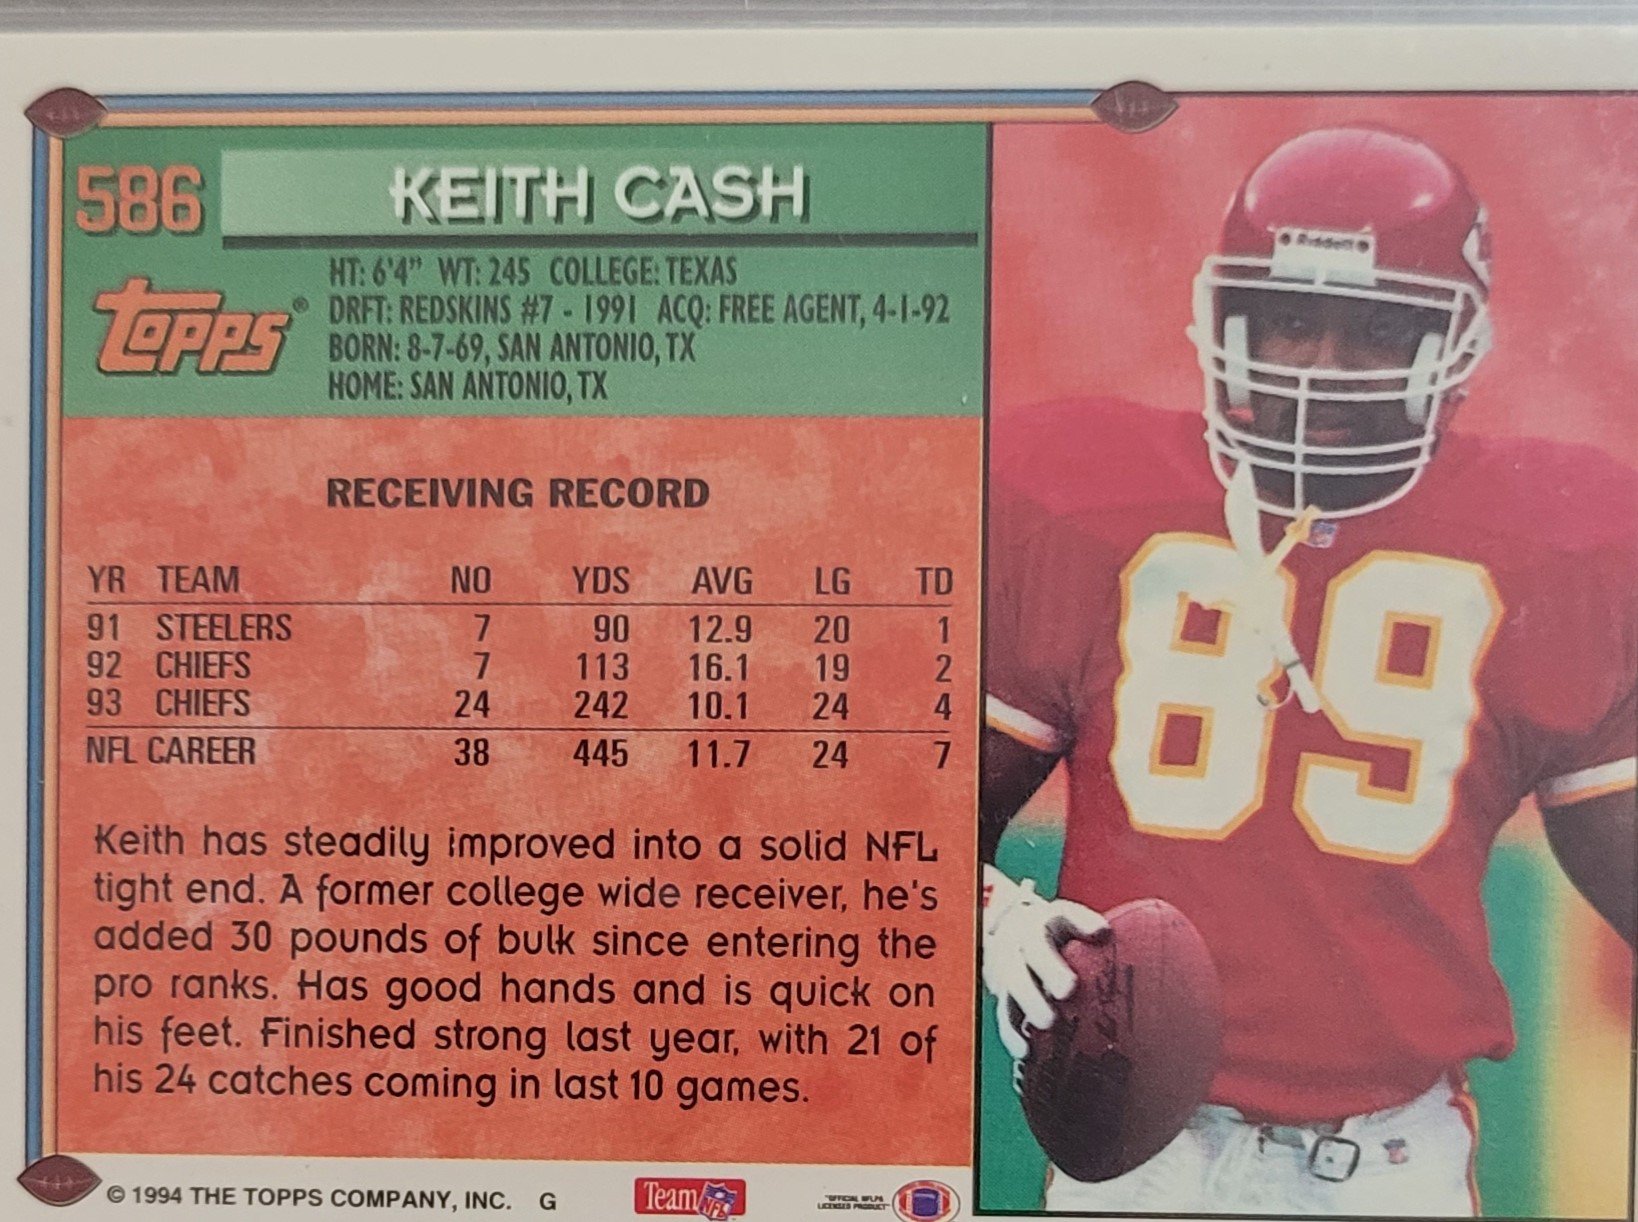 1990 Keith Cash (1).jpg